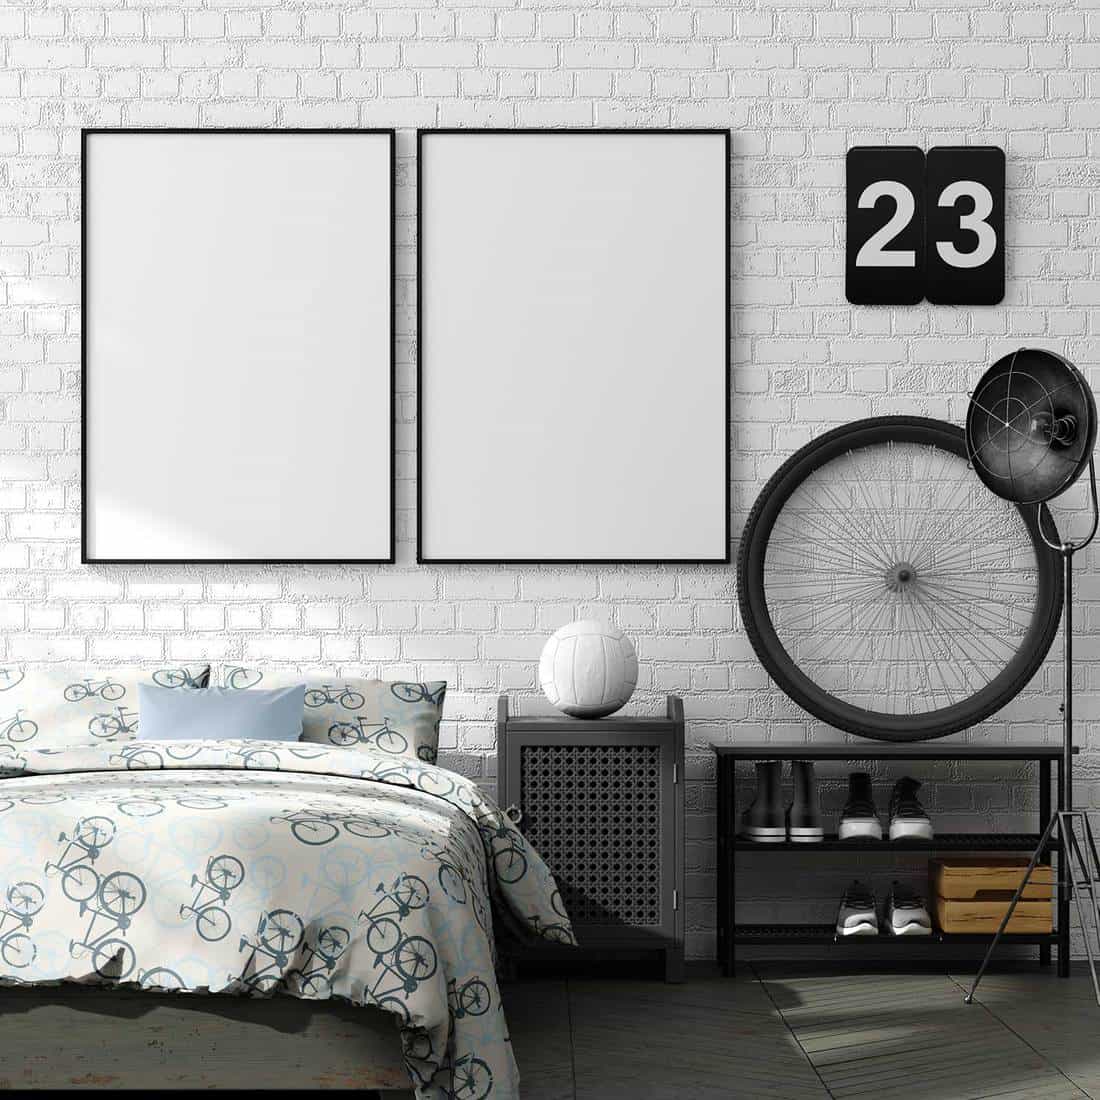 White bedrooms ideas loft style